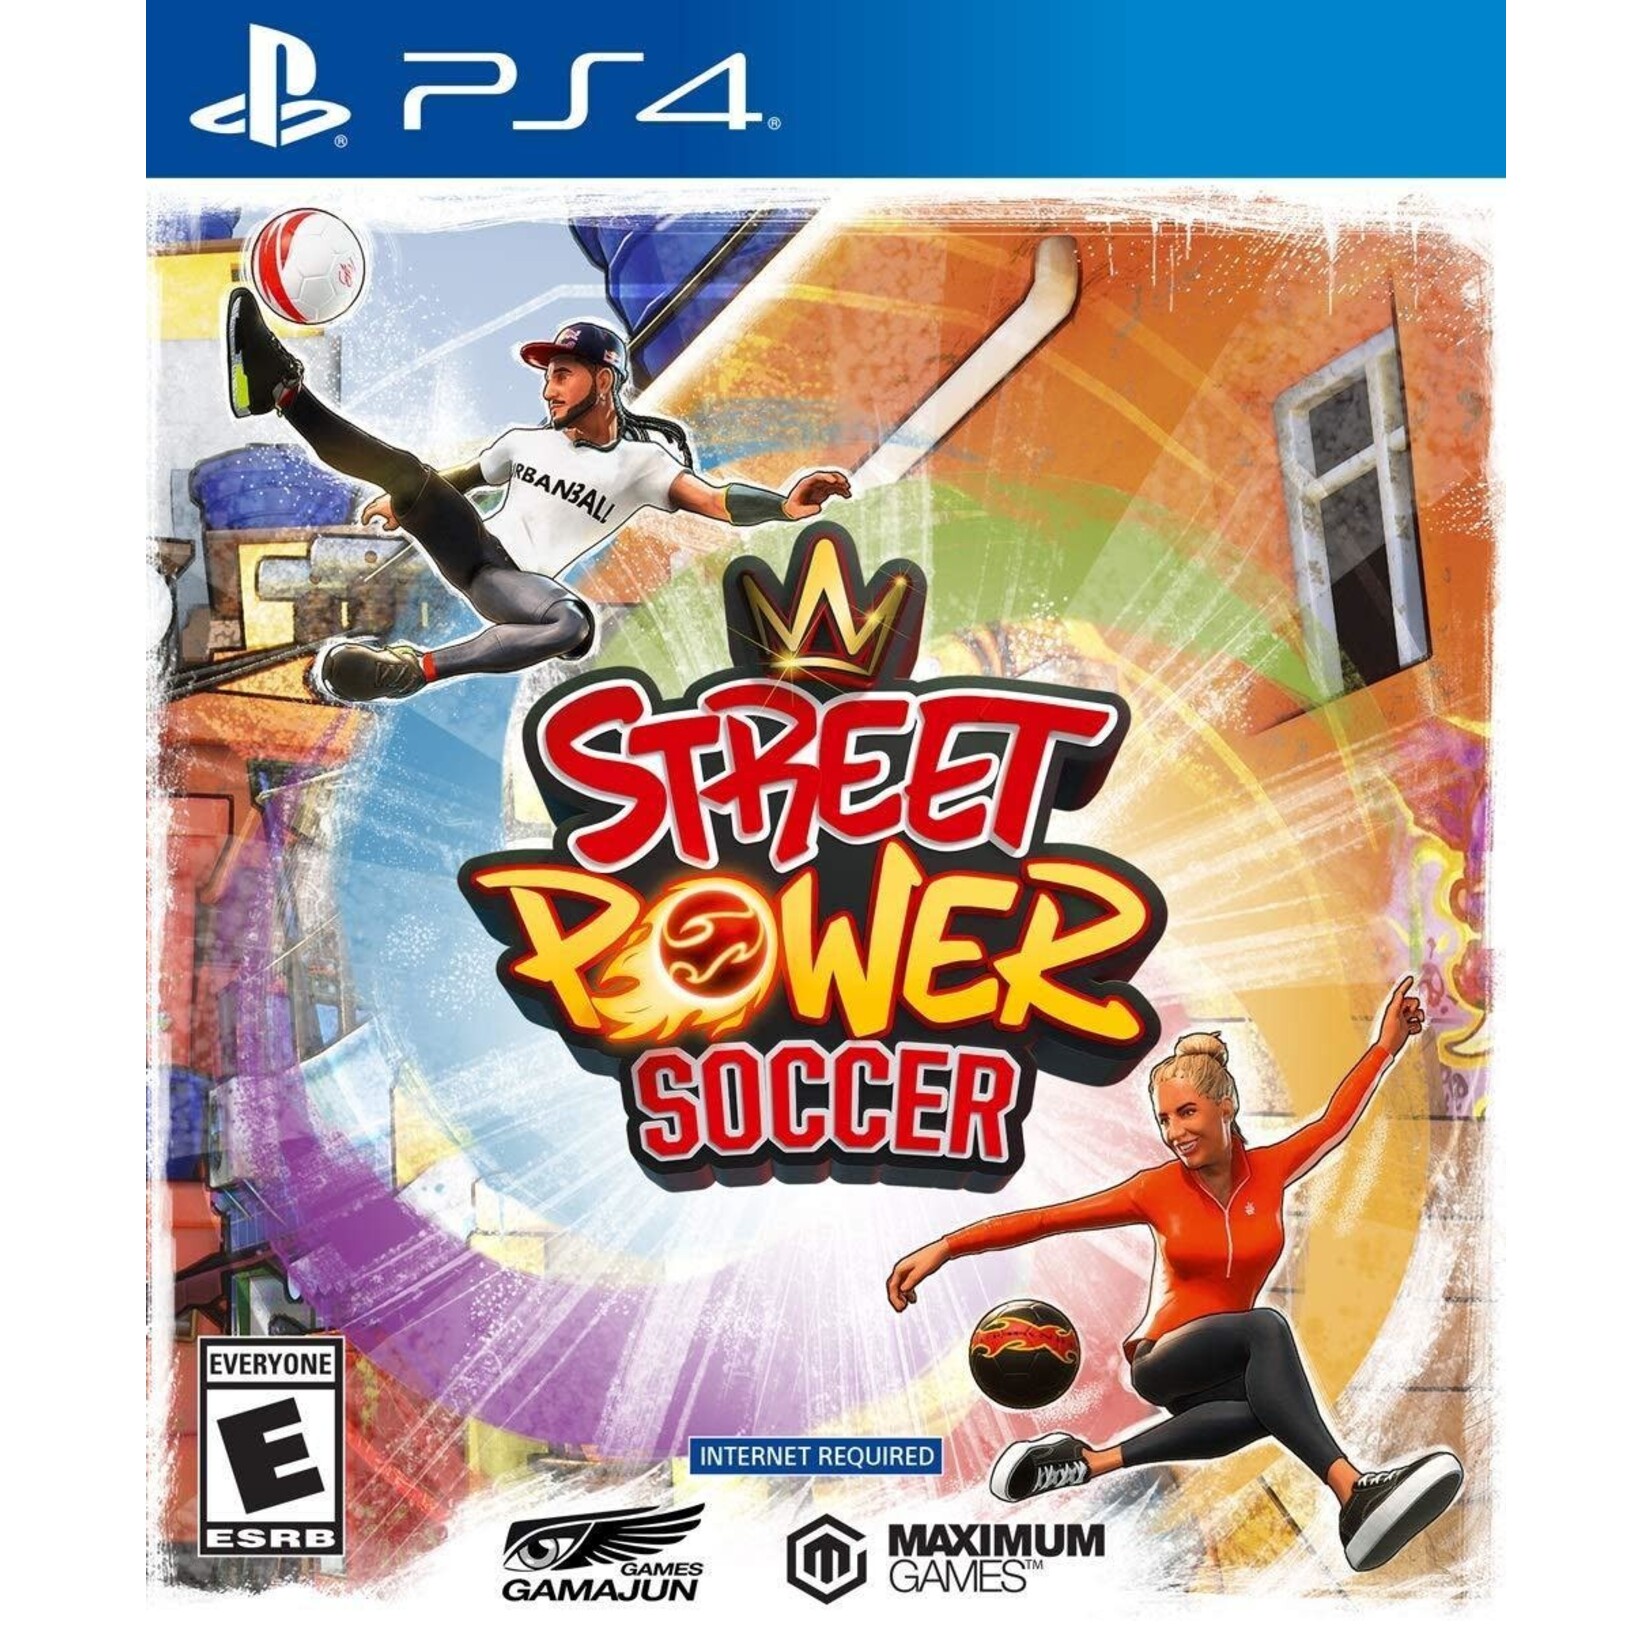 PS4 PS4 Street Power Soccer